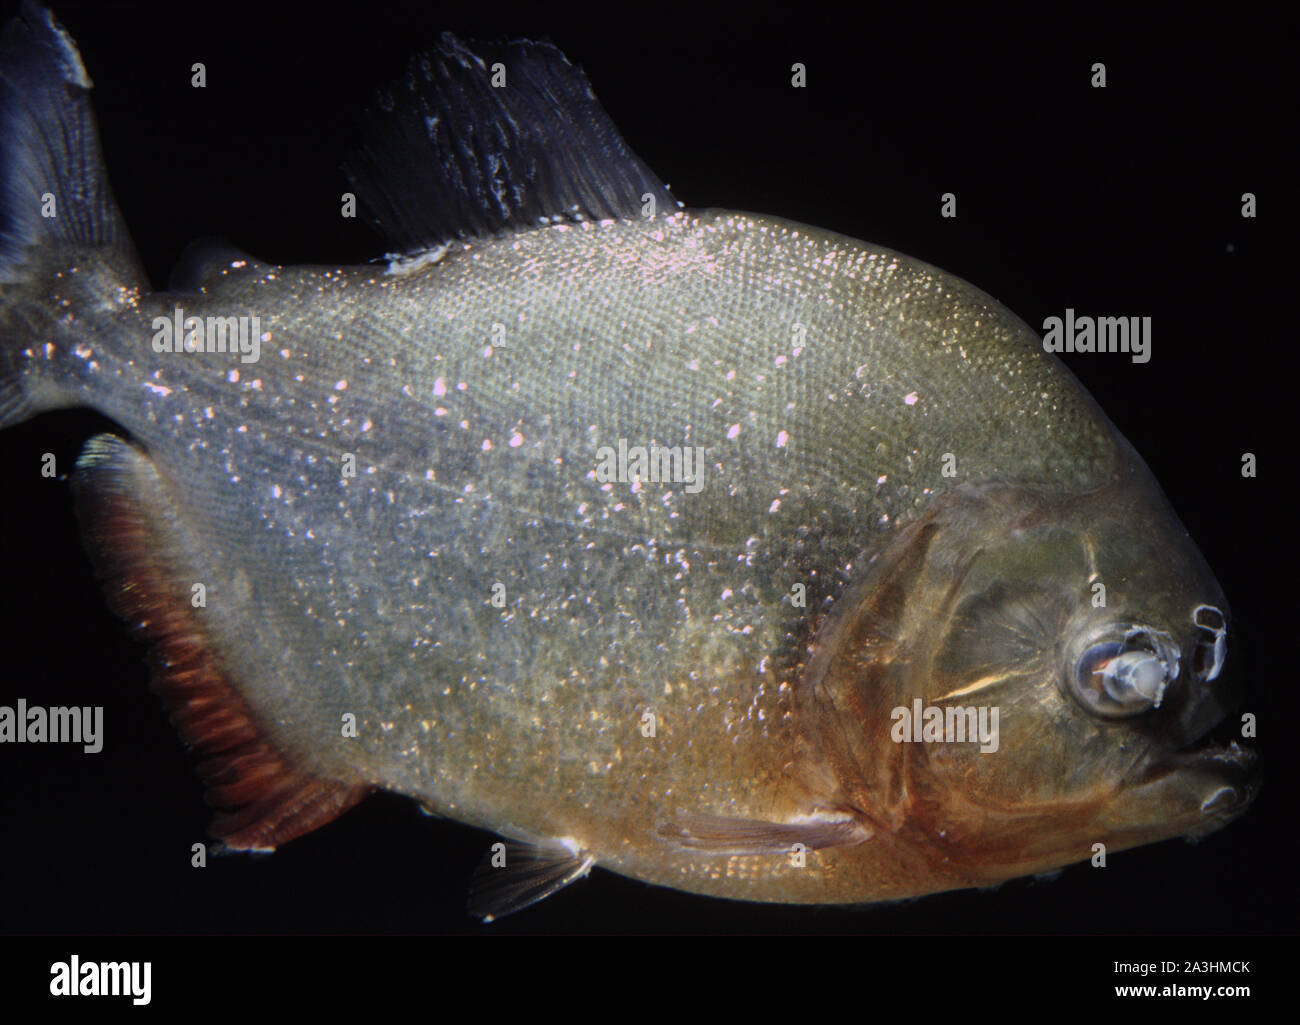 Fungosis (Saprolegnia) on the eye of a Piranha (Serrasalmus sp.) Stock Photo